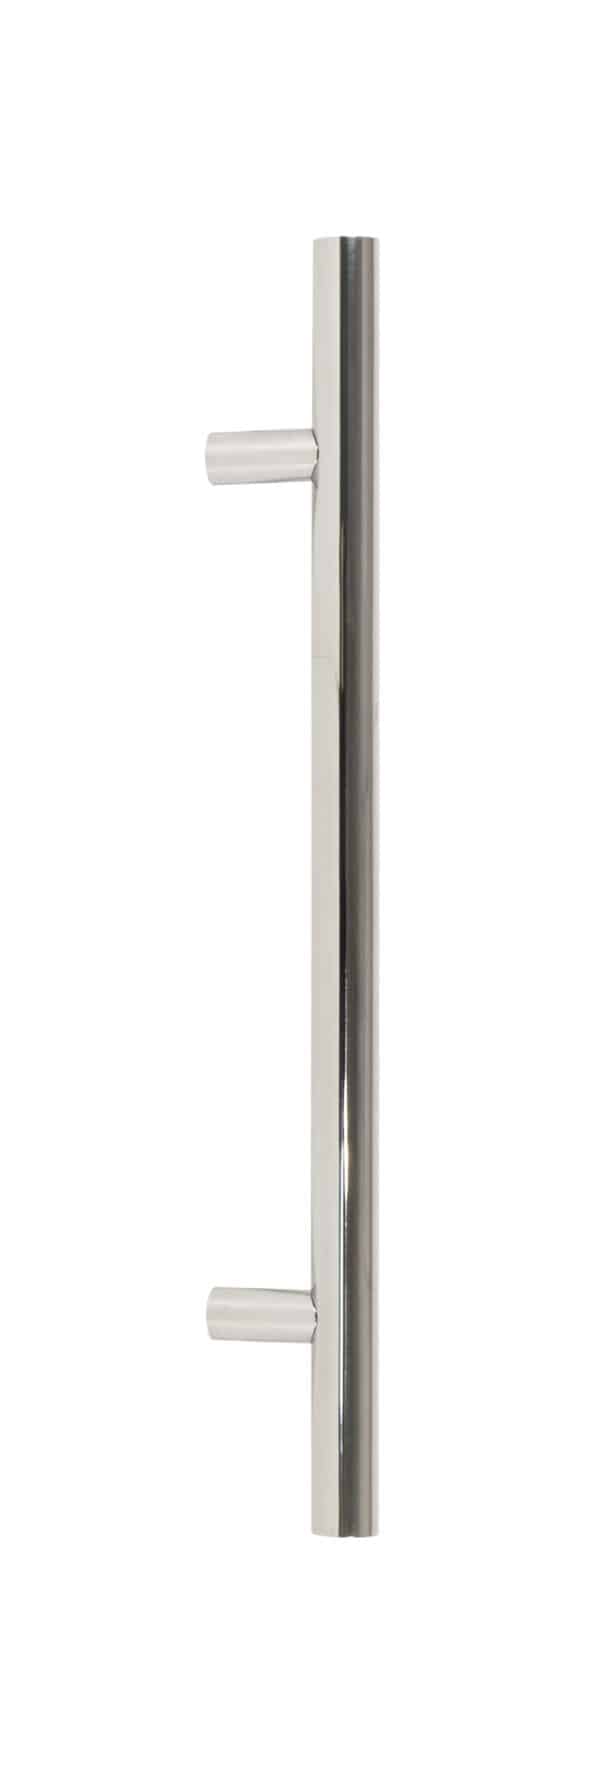 Polished SS (316) 0.6m T Bar Handle Bolt Fix 32mm Ã¸ 2